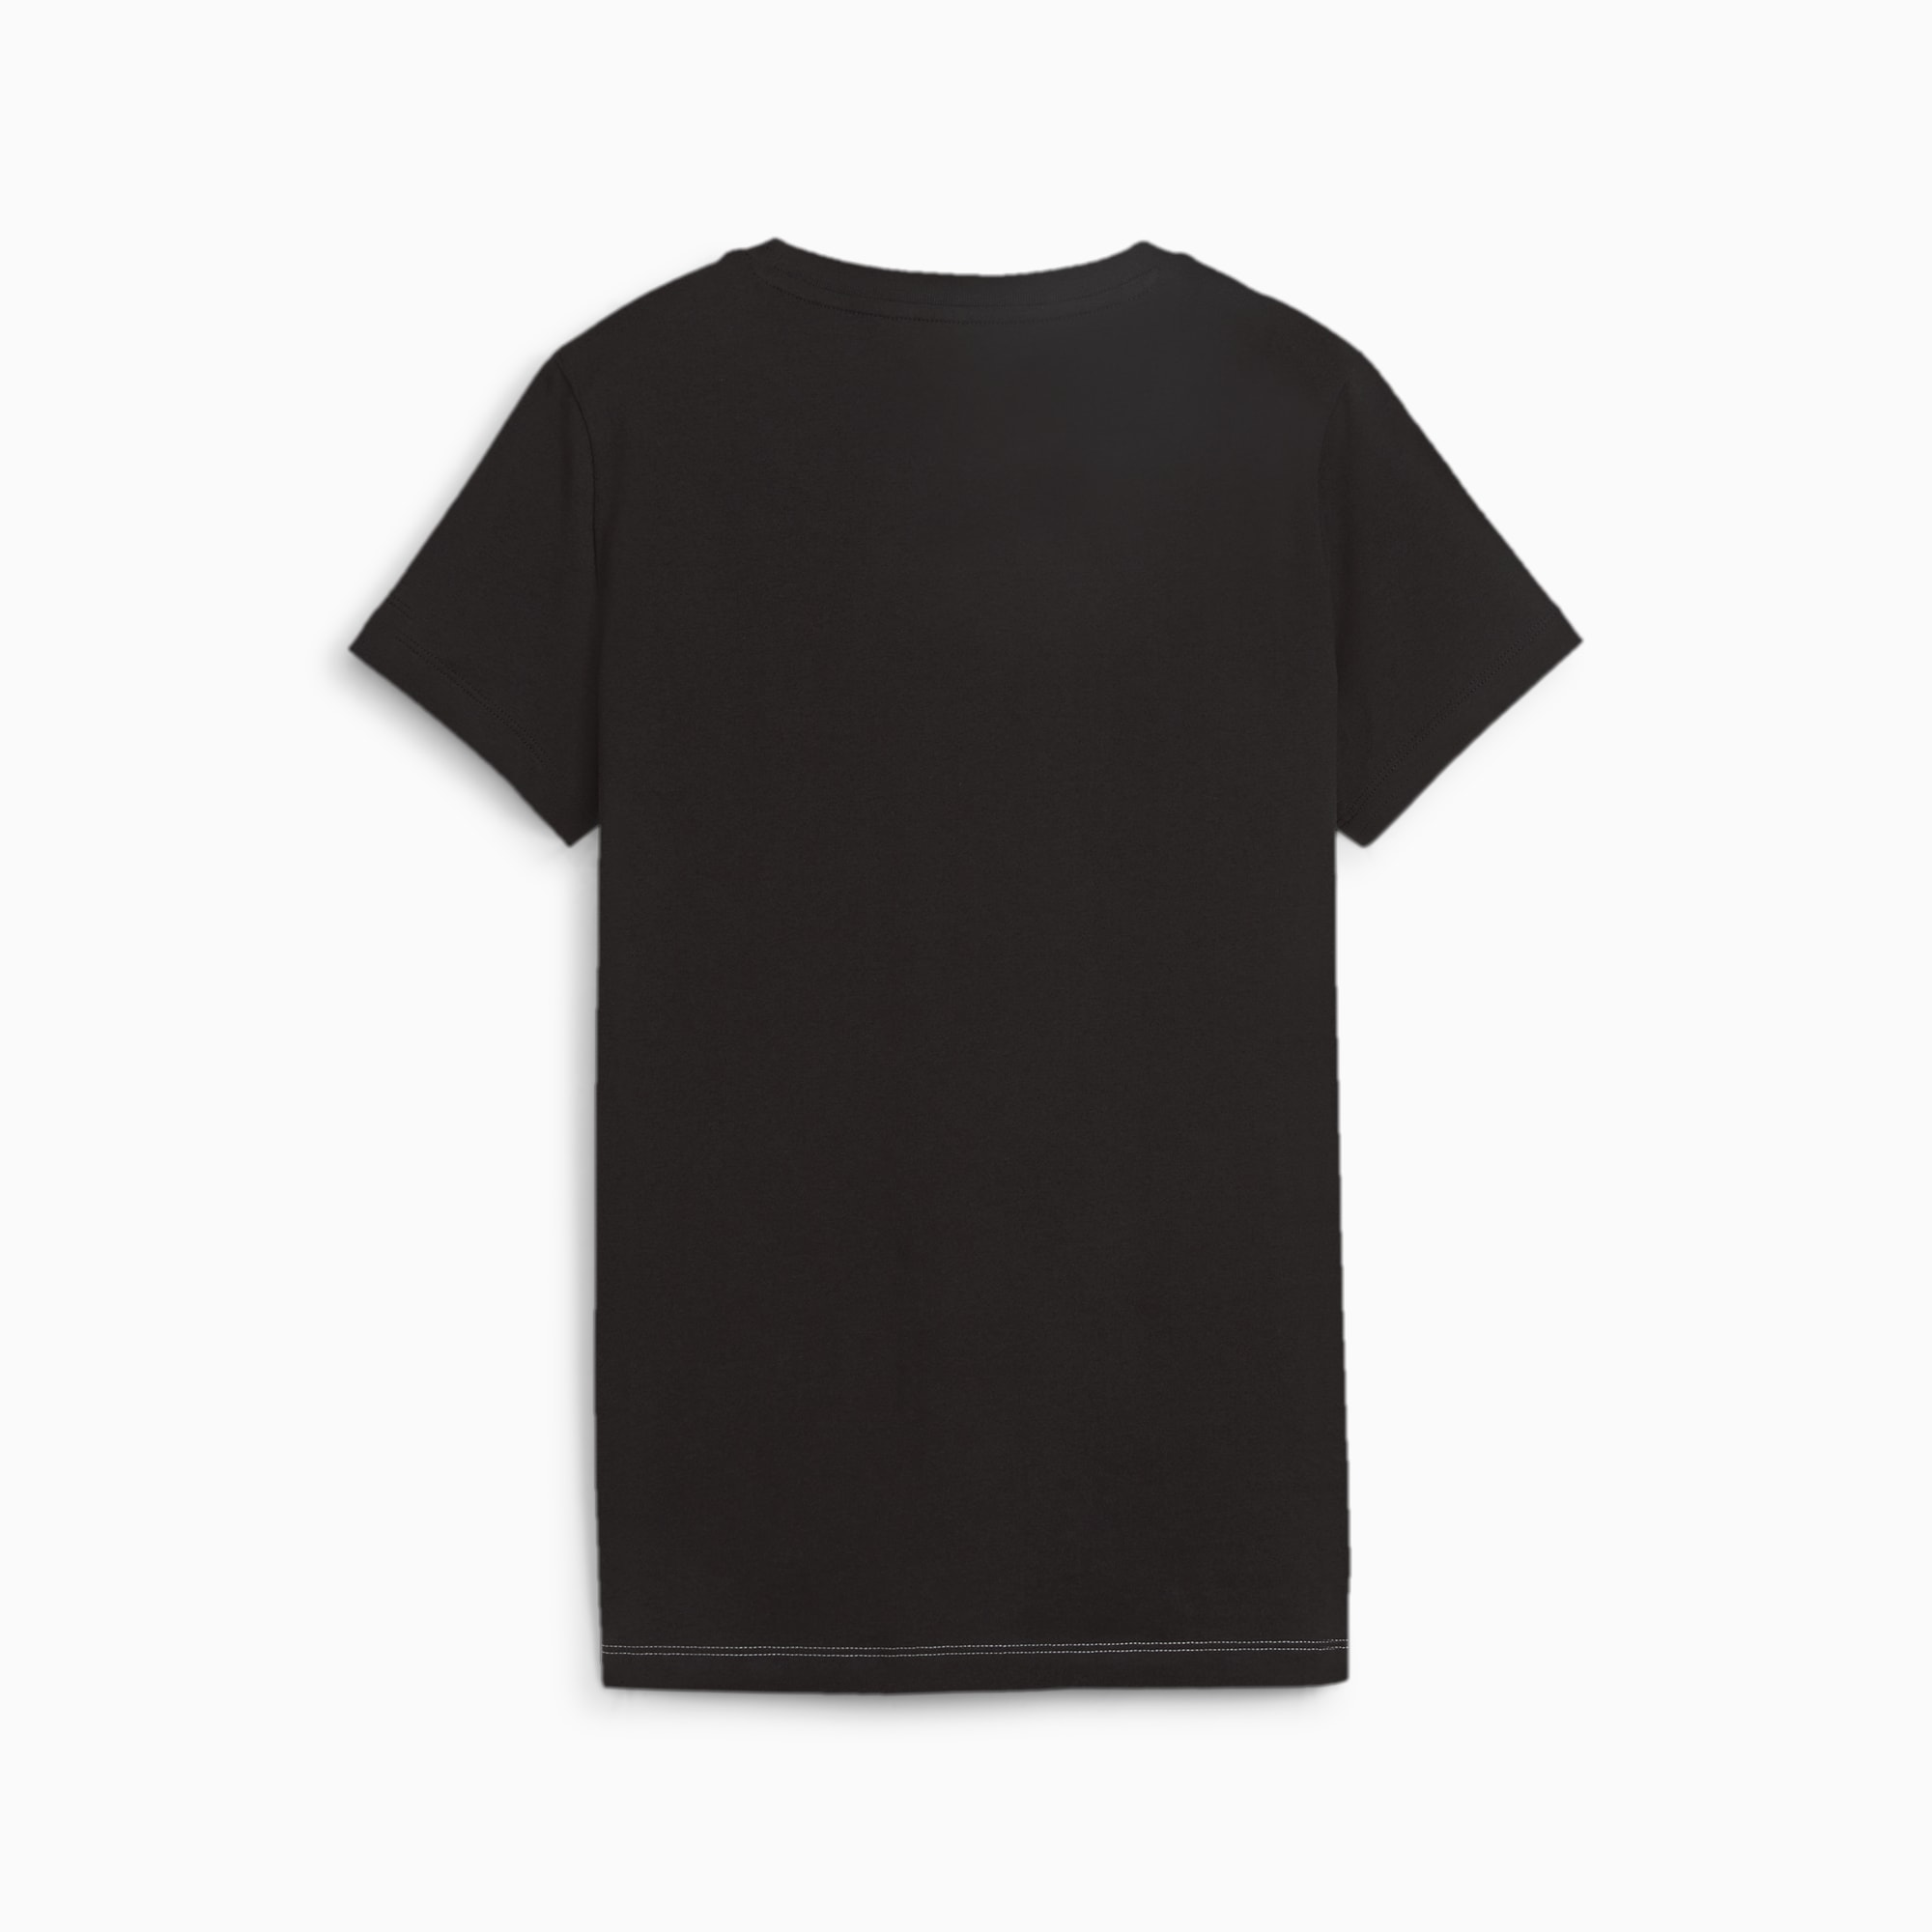 PUMA Power Women's T-Shirt, Black, Size L, Clothing